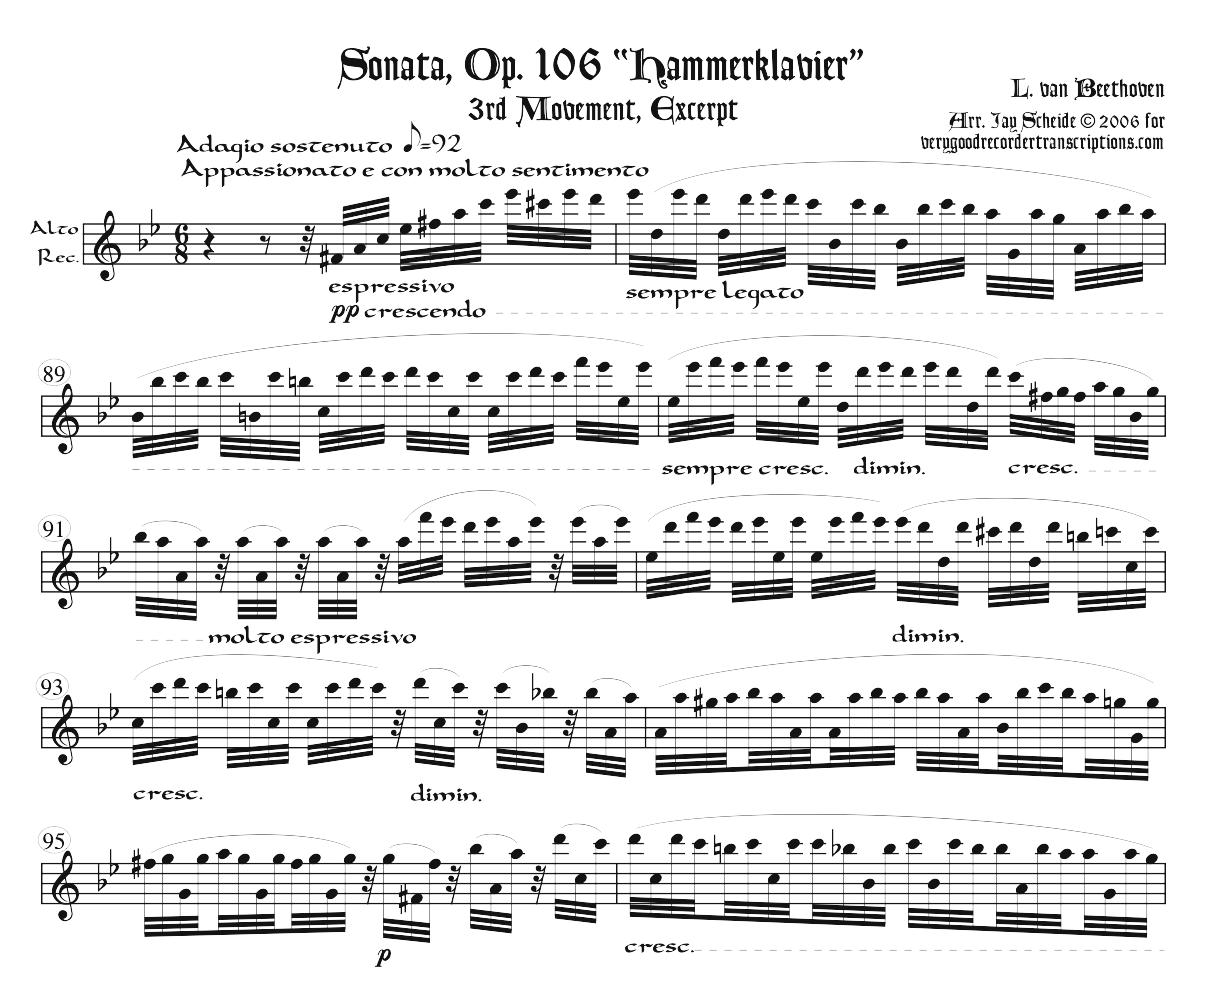 Excerpt from third movement of “Hammerklavier” Sonata, Op. 106